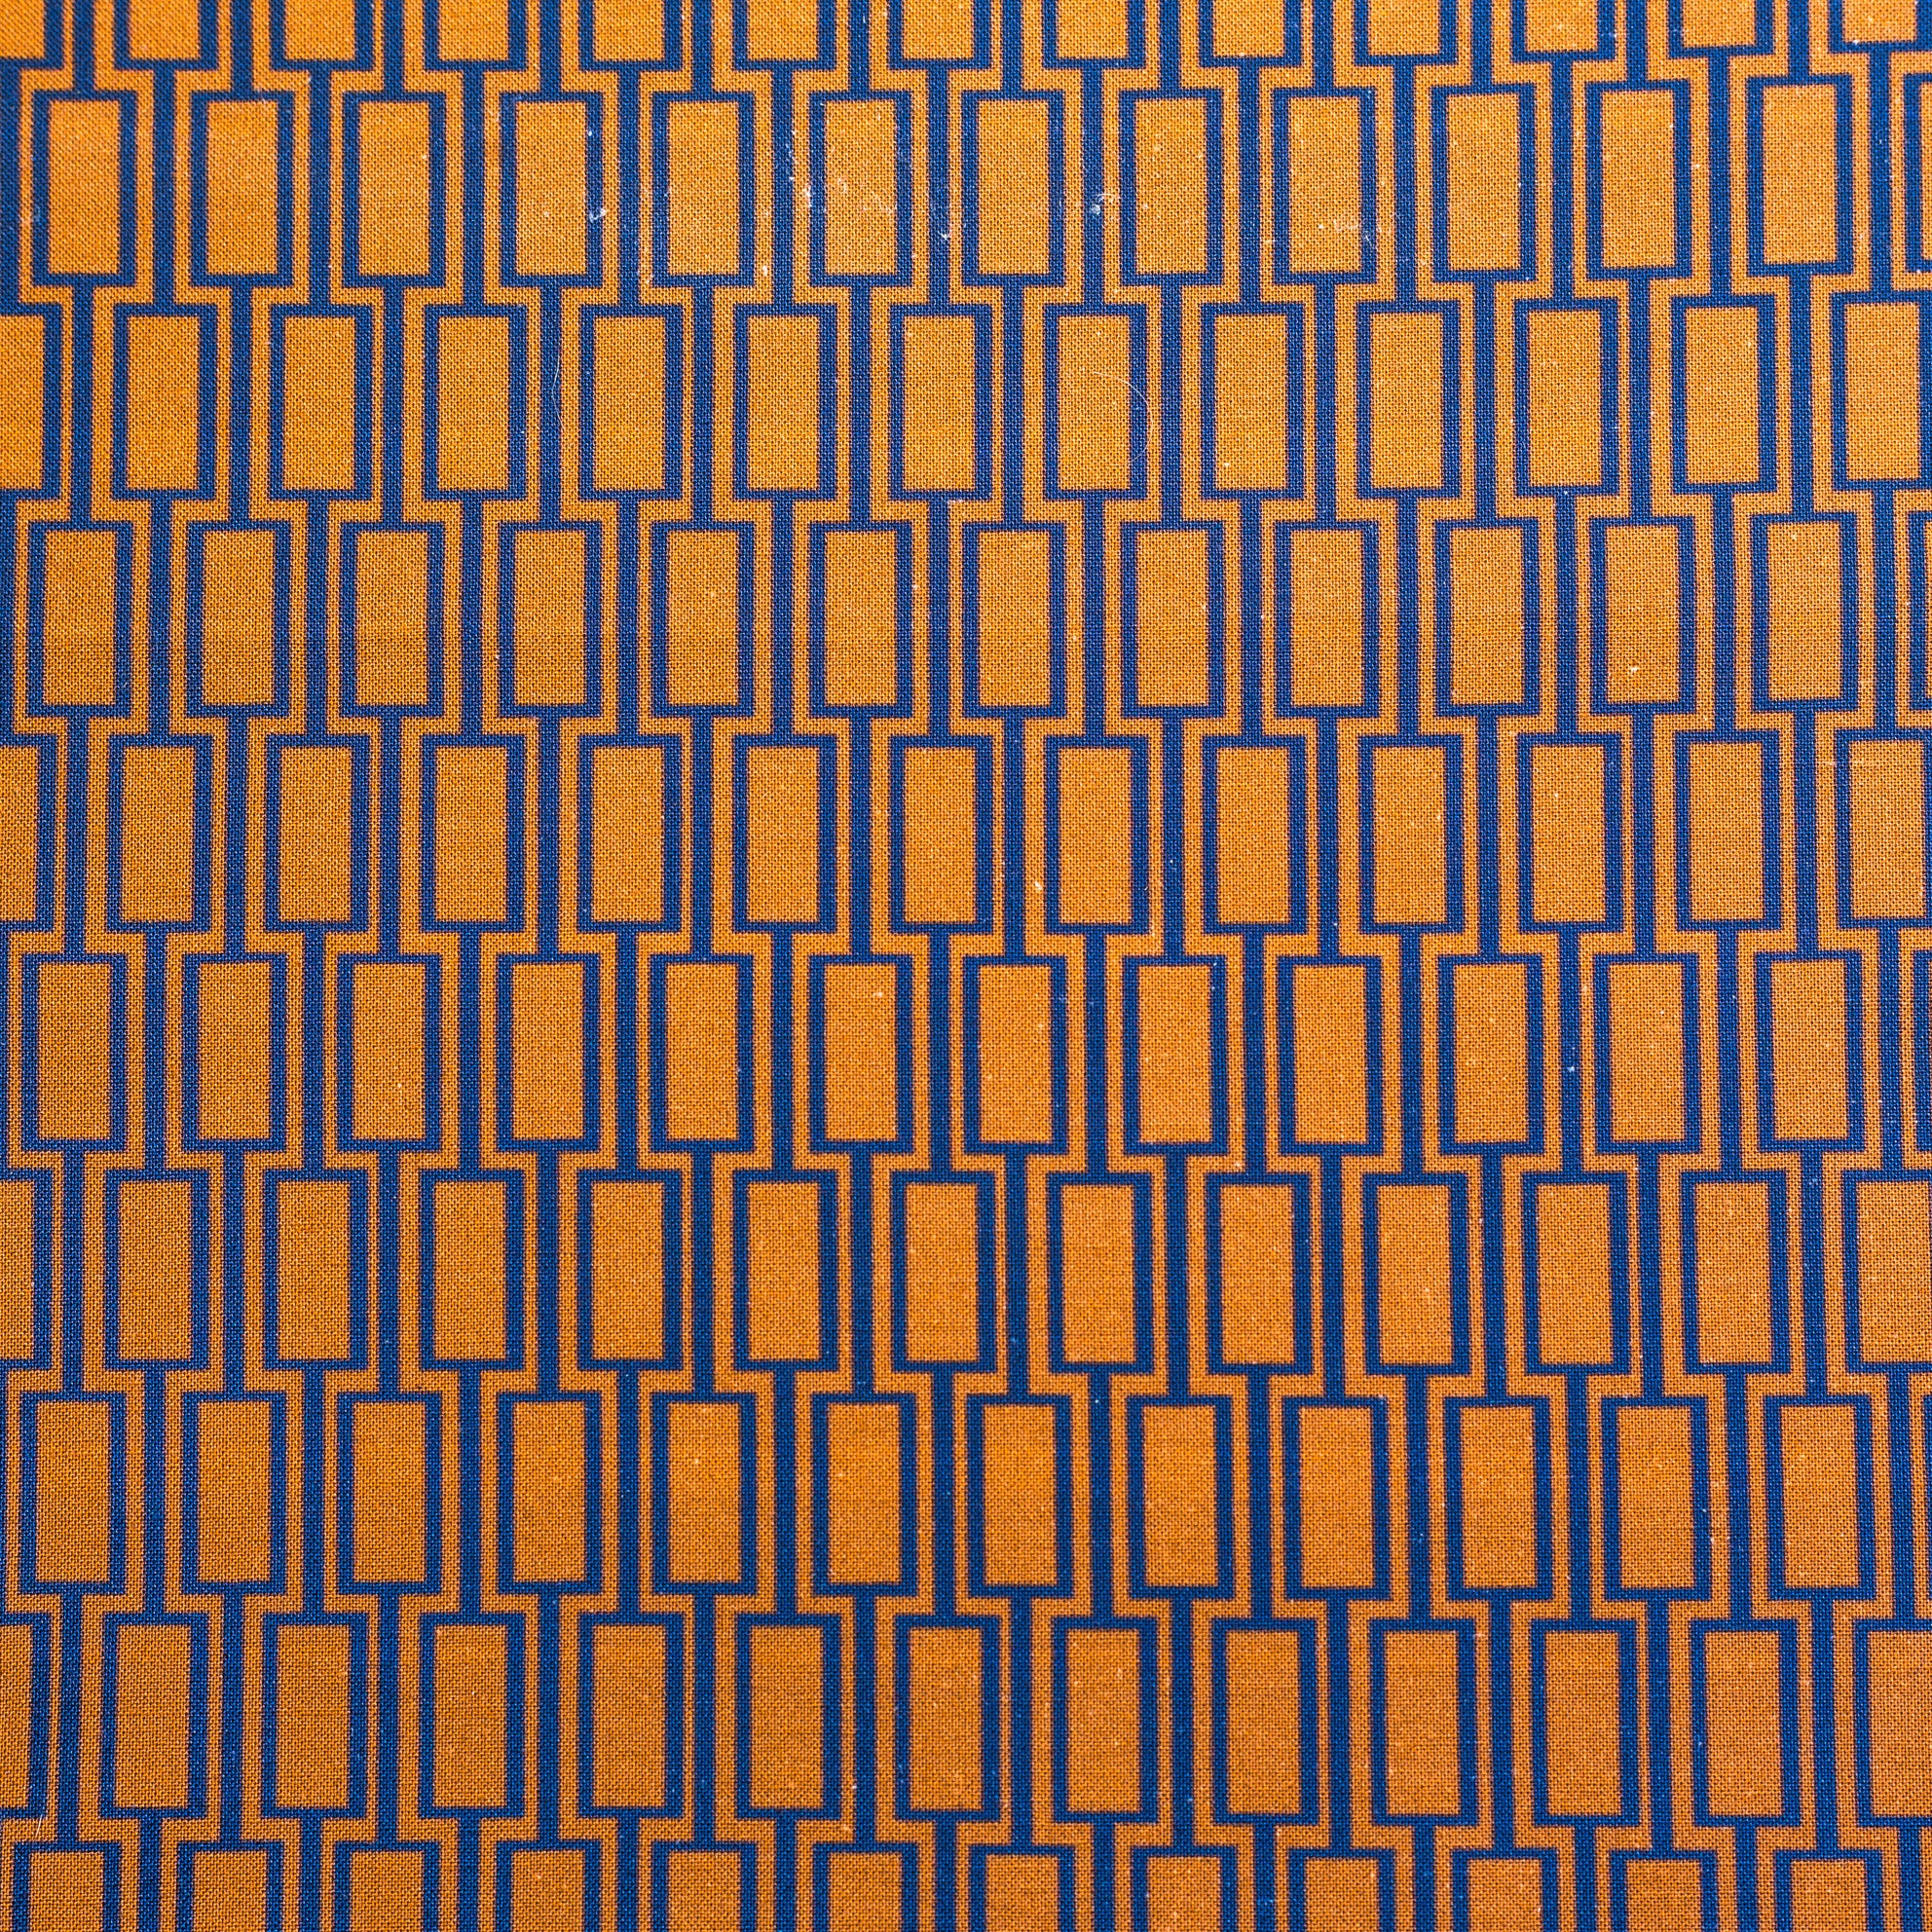 Geometric Print Fabric - Lattice P104/212 Toffee/Plimsoll Blue